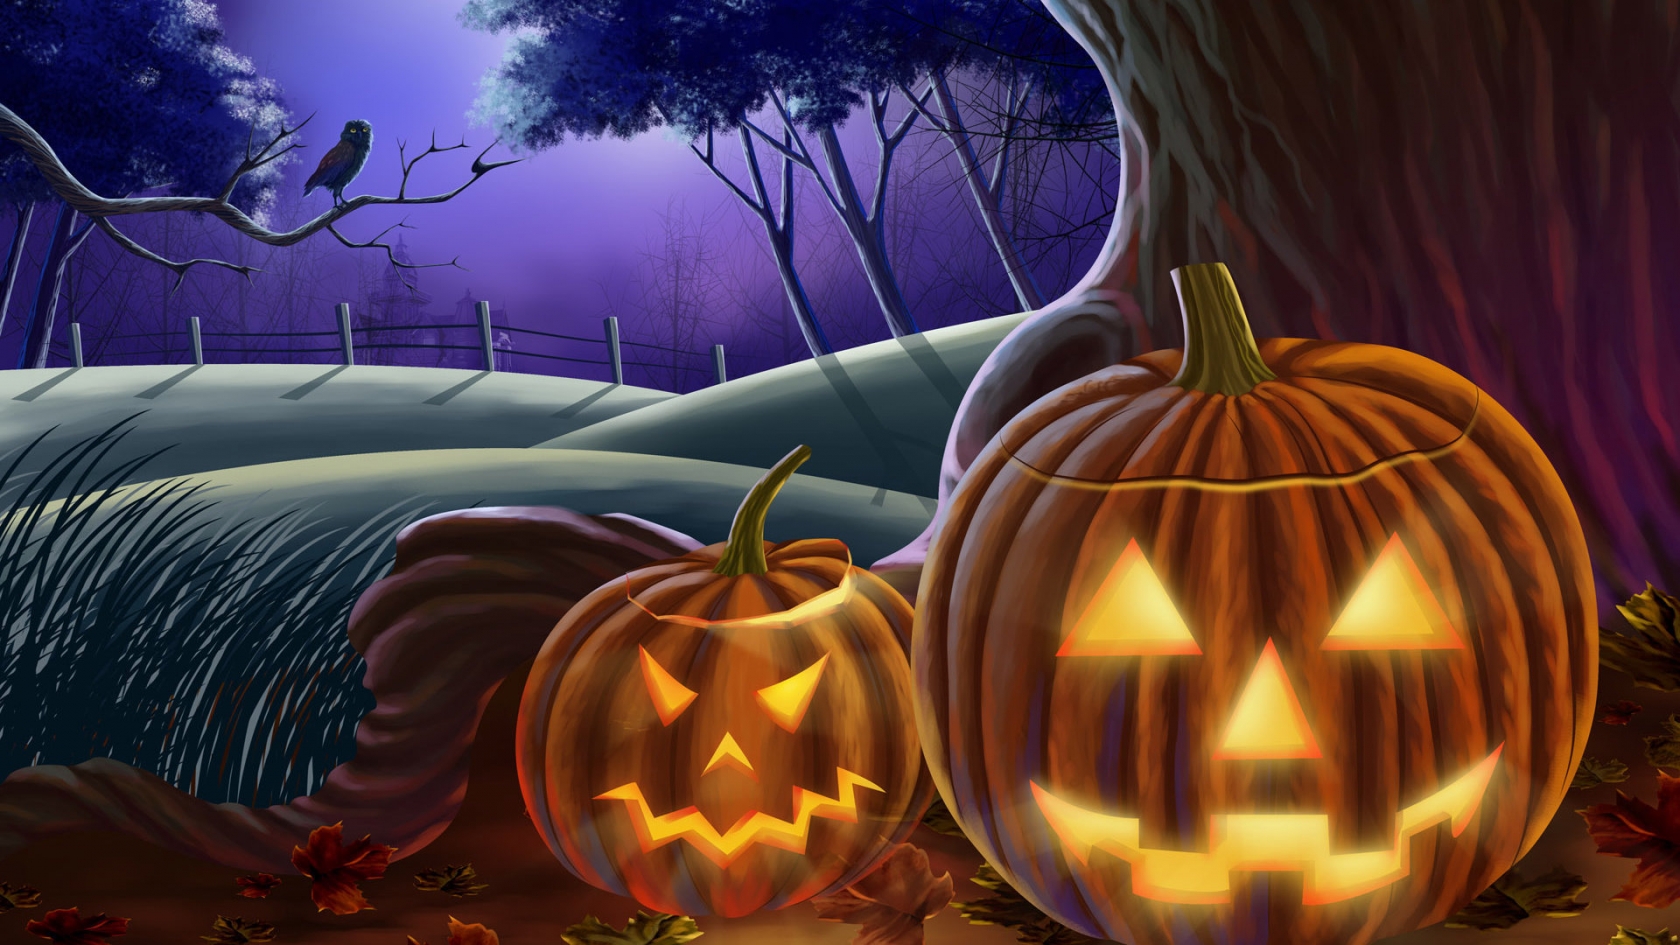 Illuminated Pumpkins for Halloween for 1680 x 945 HDTV resolution